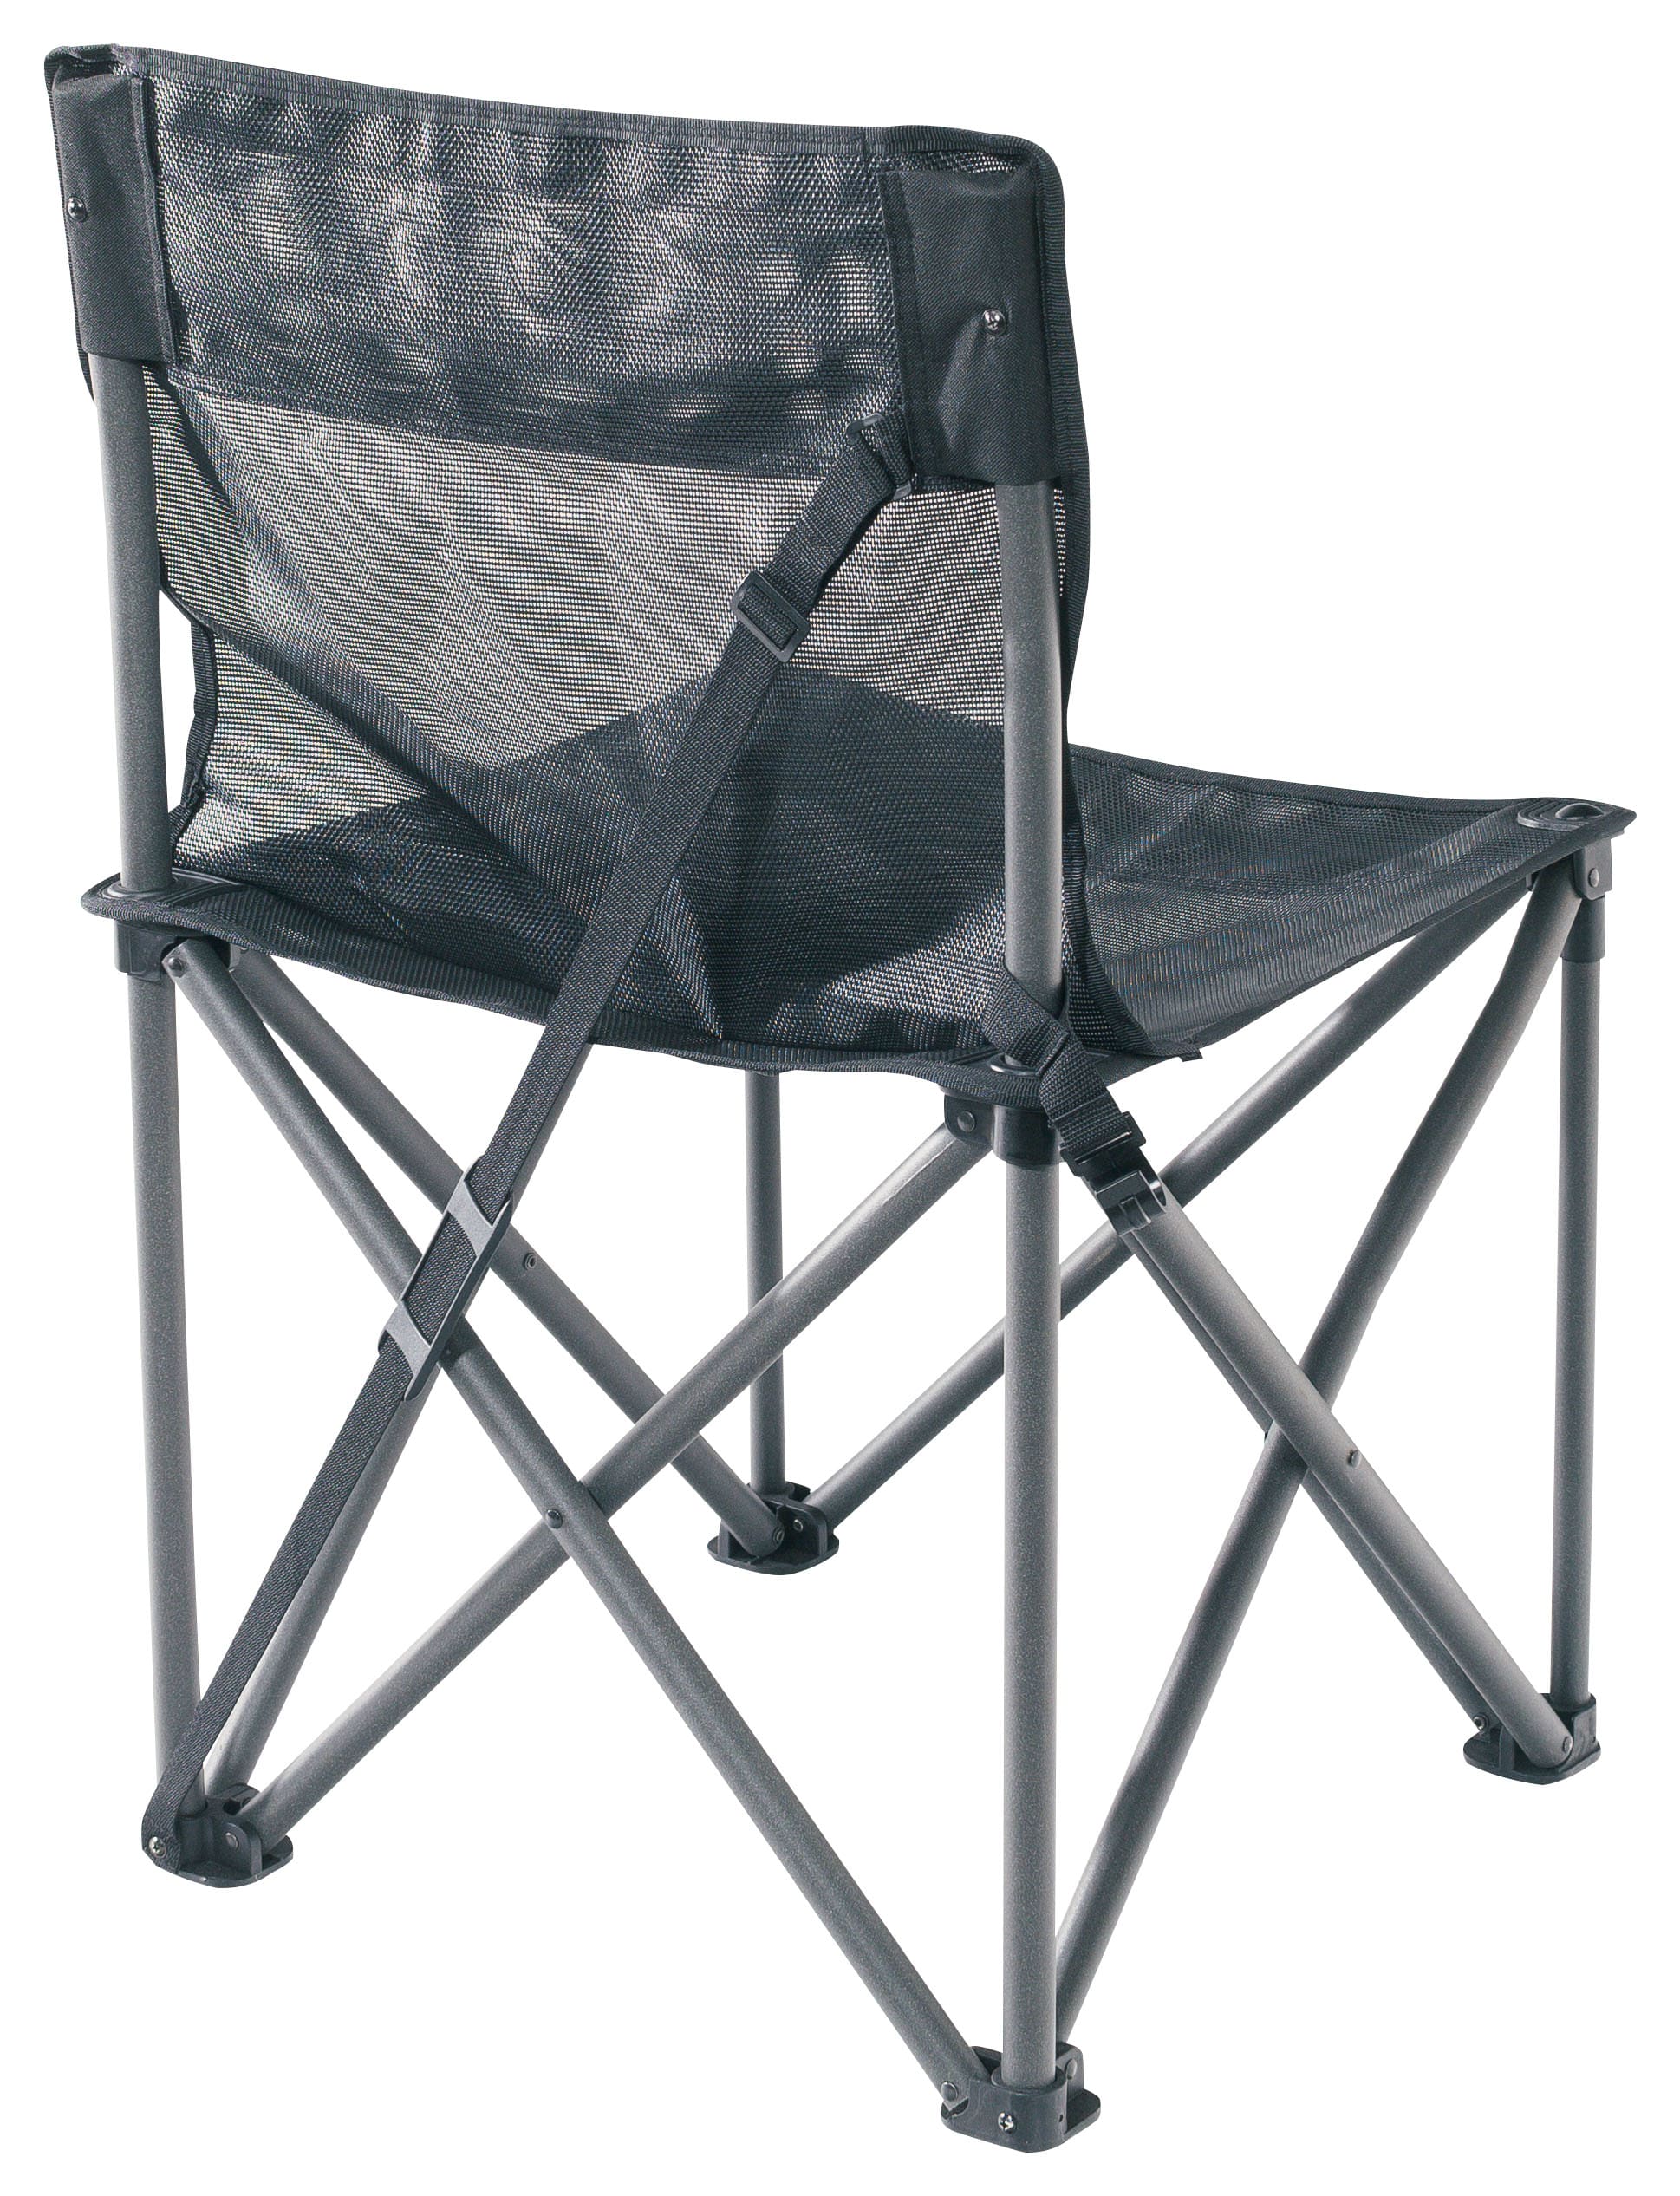 Cabela's® Comfort Max Quad Folding Blind Chair